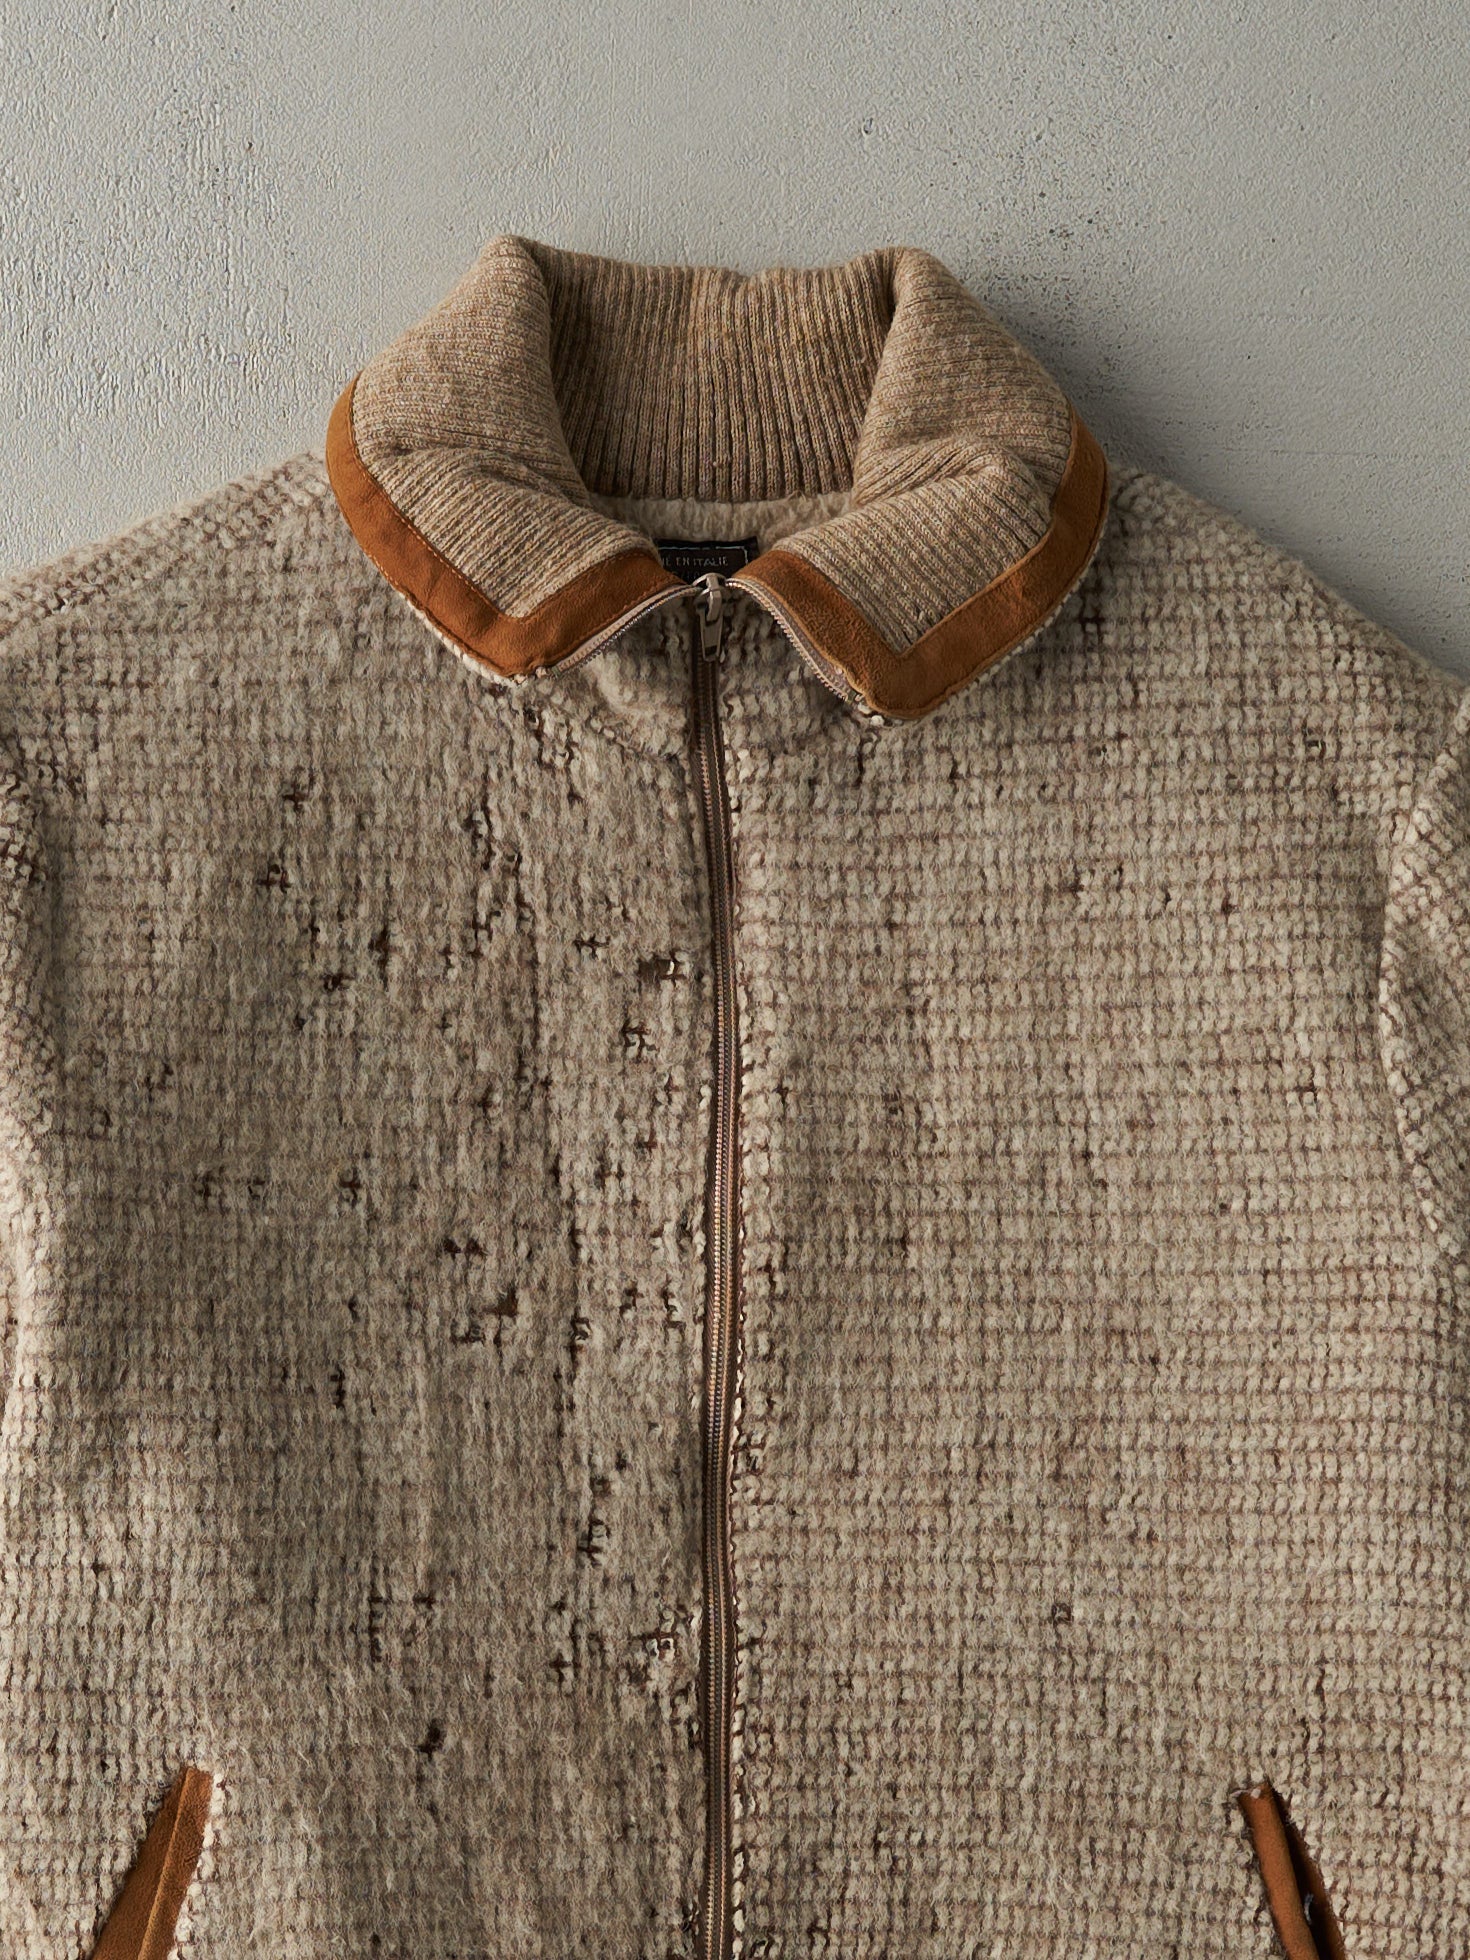 Vintage 60s Beige Marlboro Wool Knit Jacket (M)